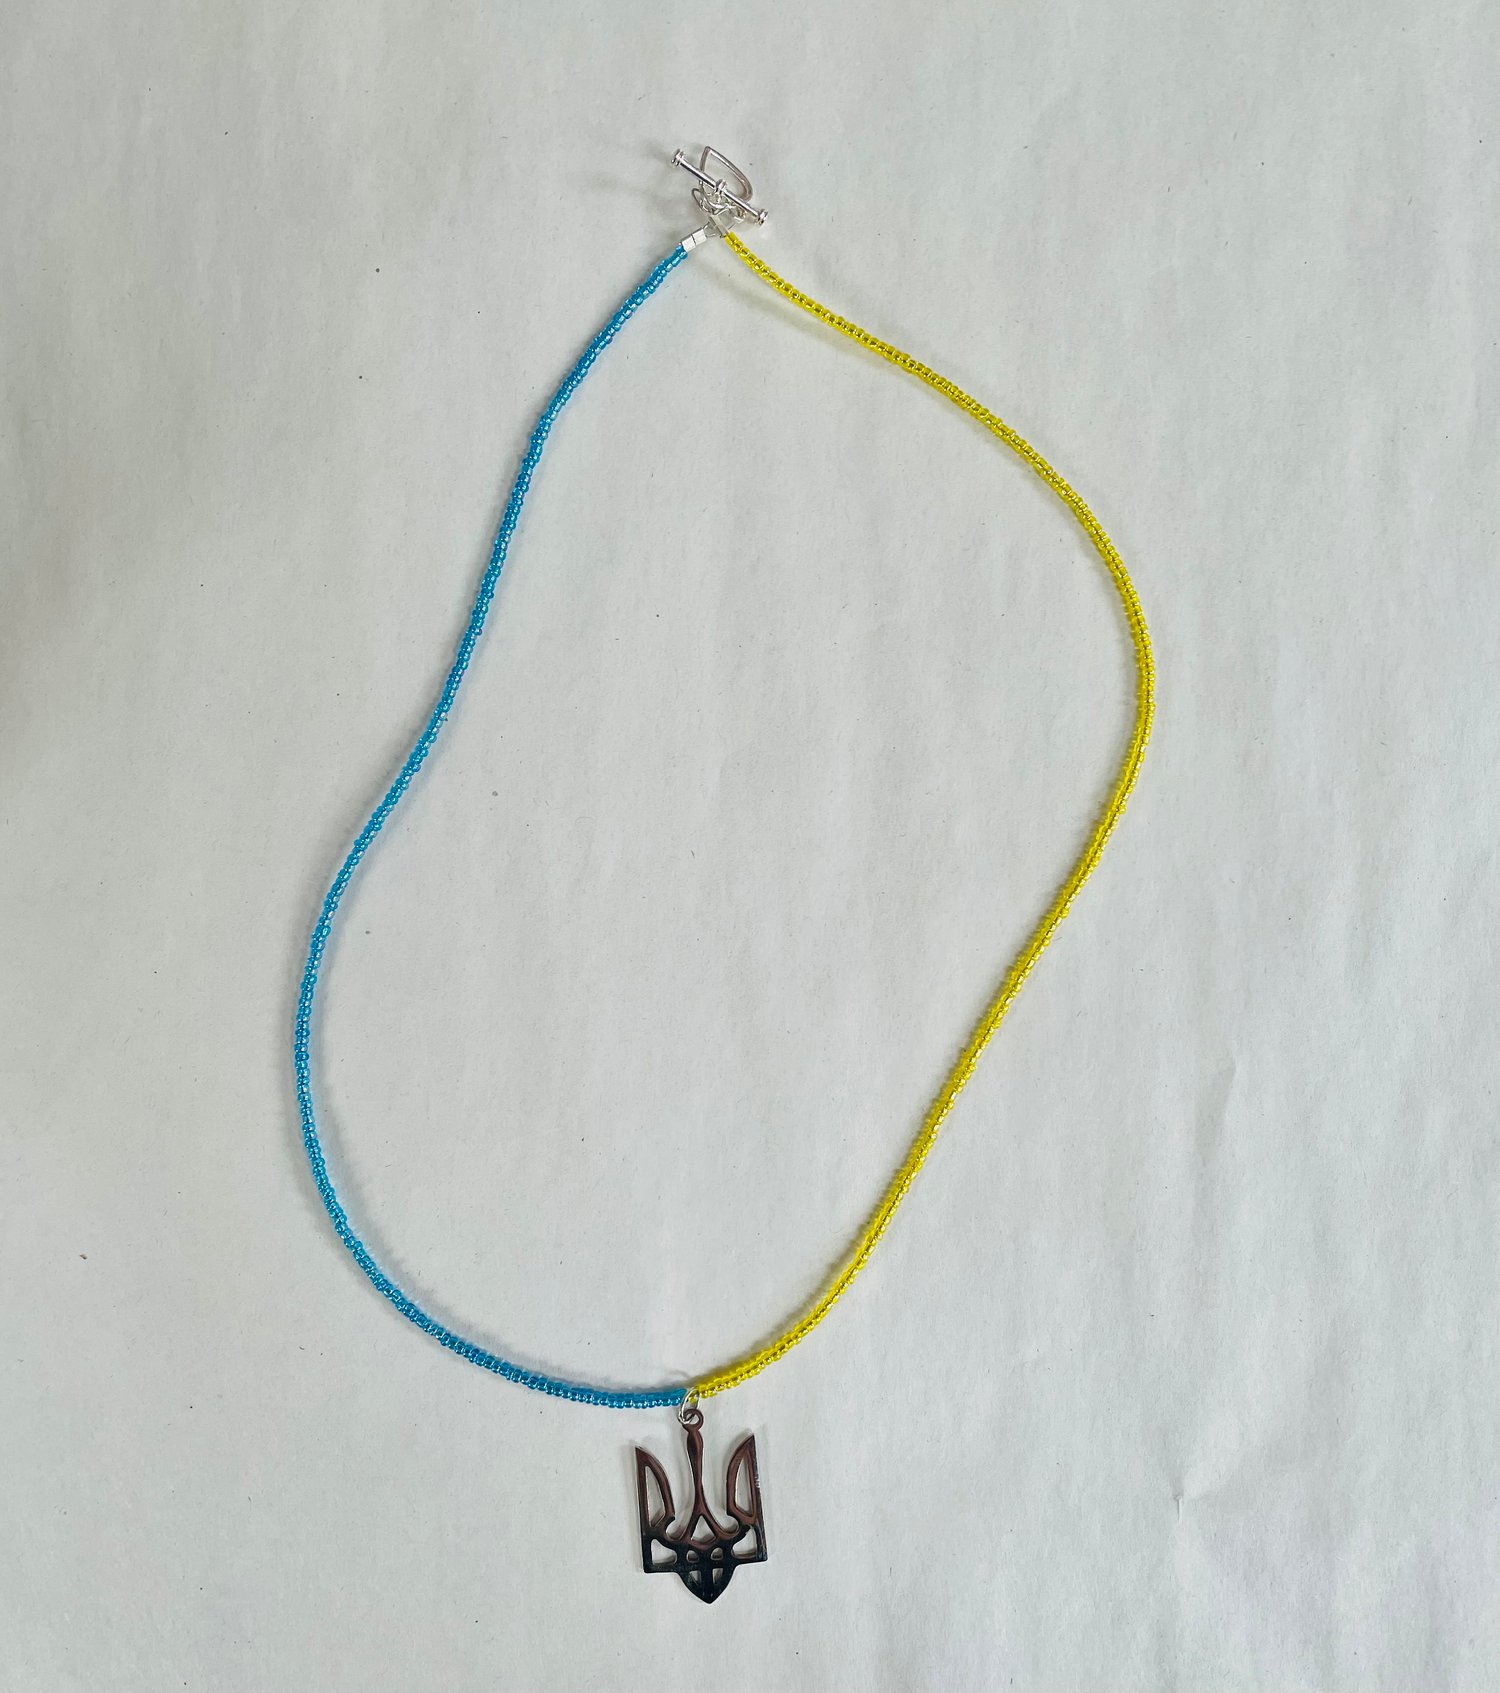 Image of Slava Ukraini necklace